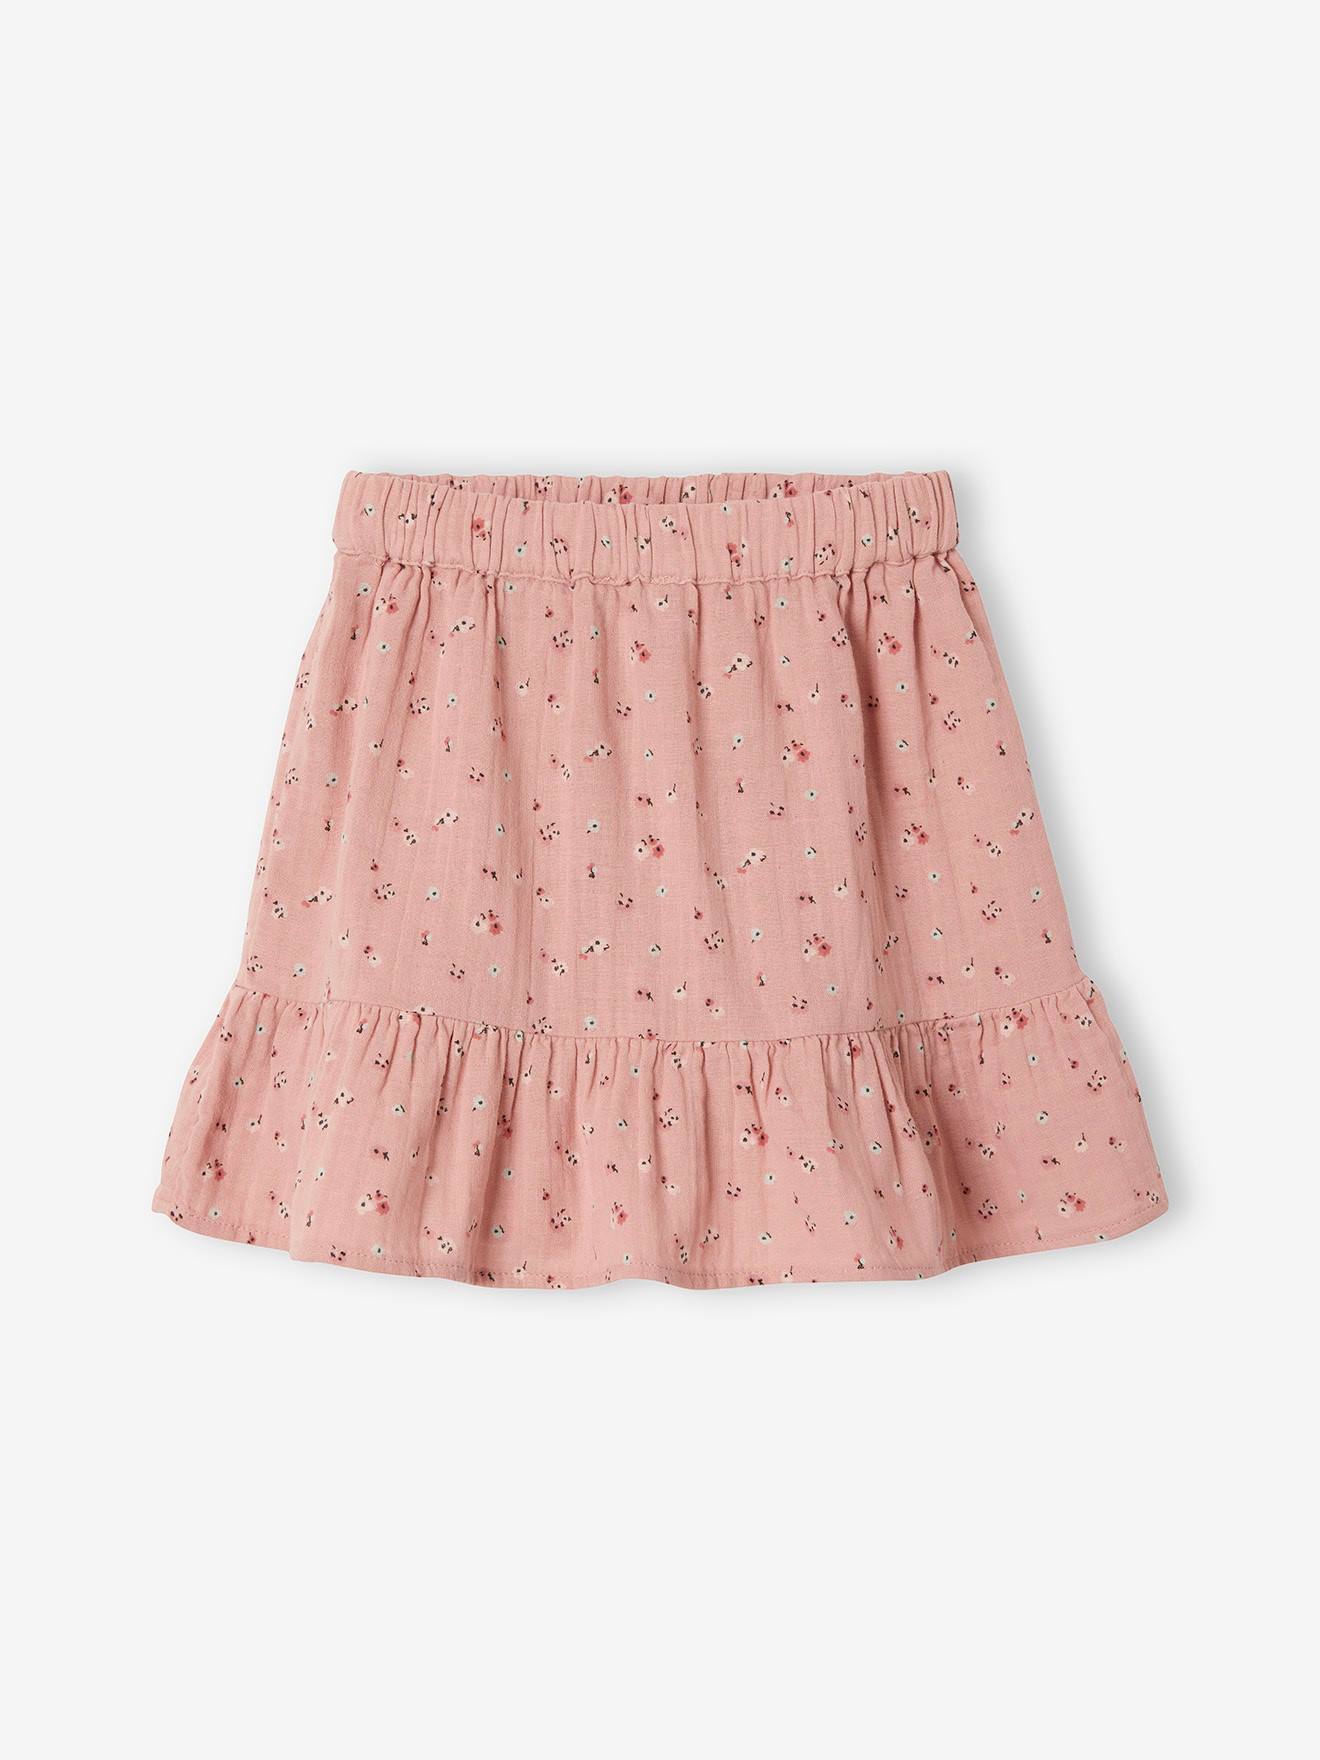 Bedrukte jurk van katoengaas voor meisjes rozeblush met print